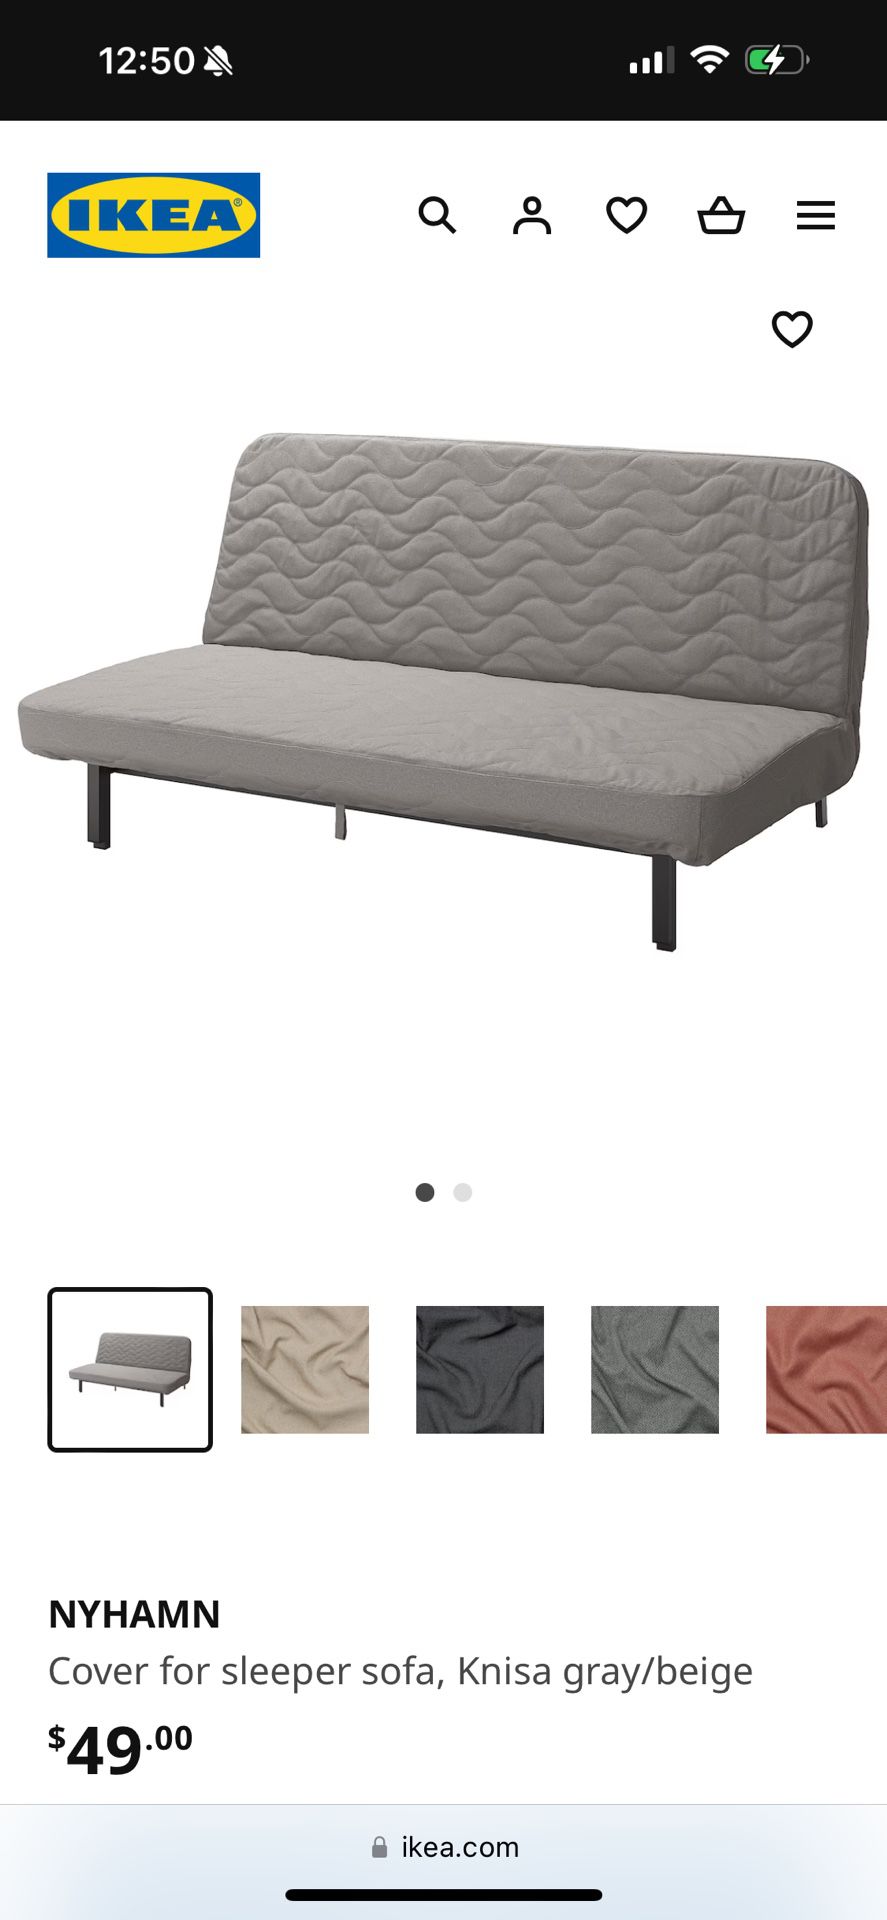 IKEA queen size futon cover